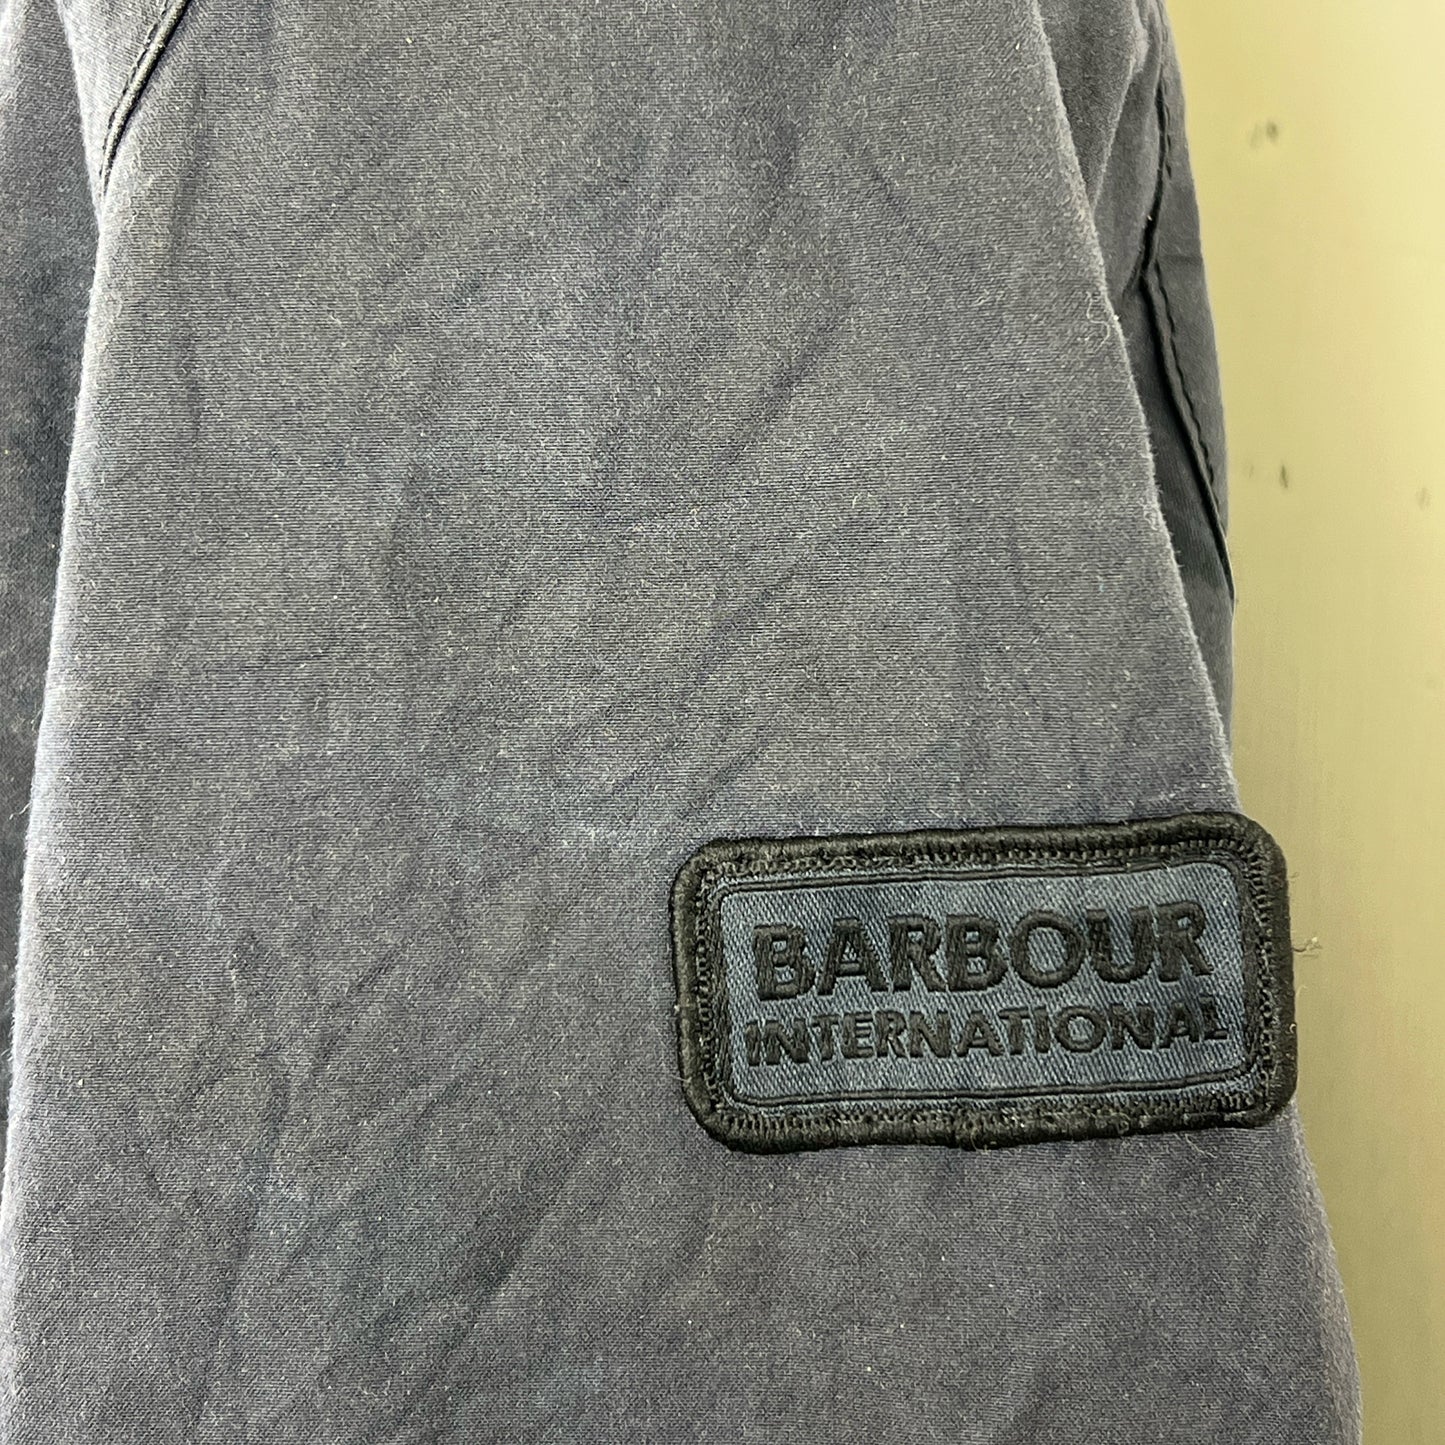 Giacca Barbour International Uomo Duke Blu Large - Man Navy Duke wax Jacket Size L